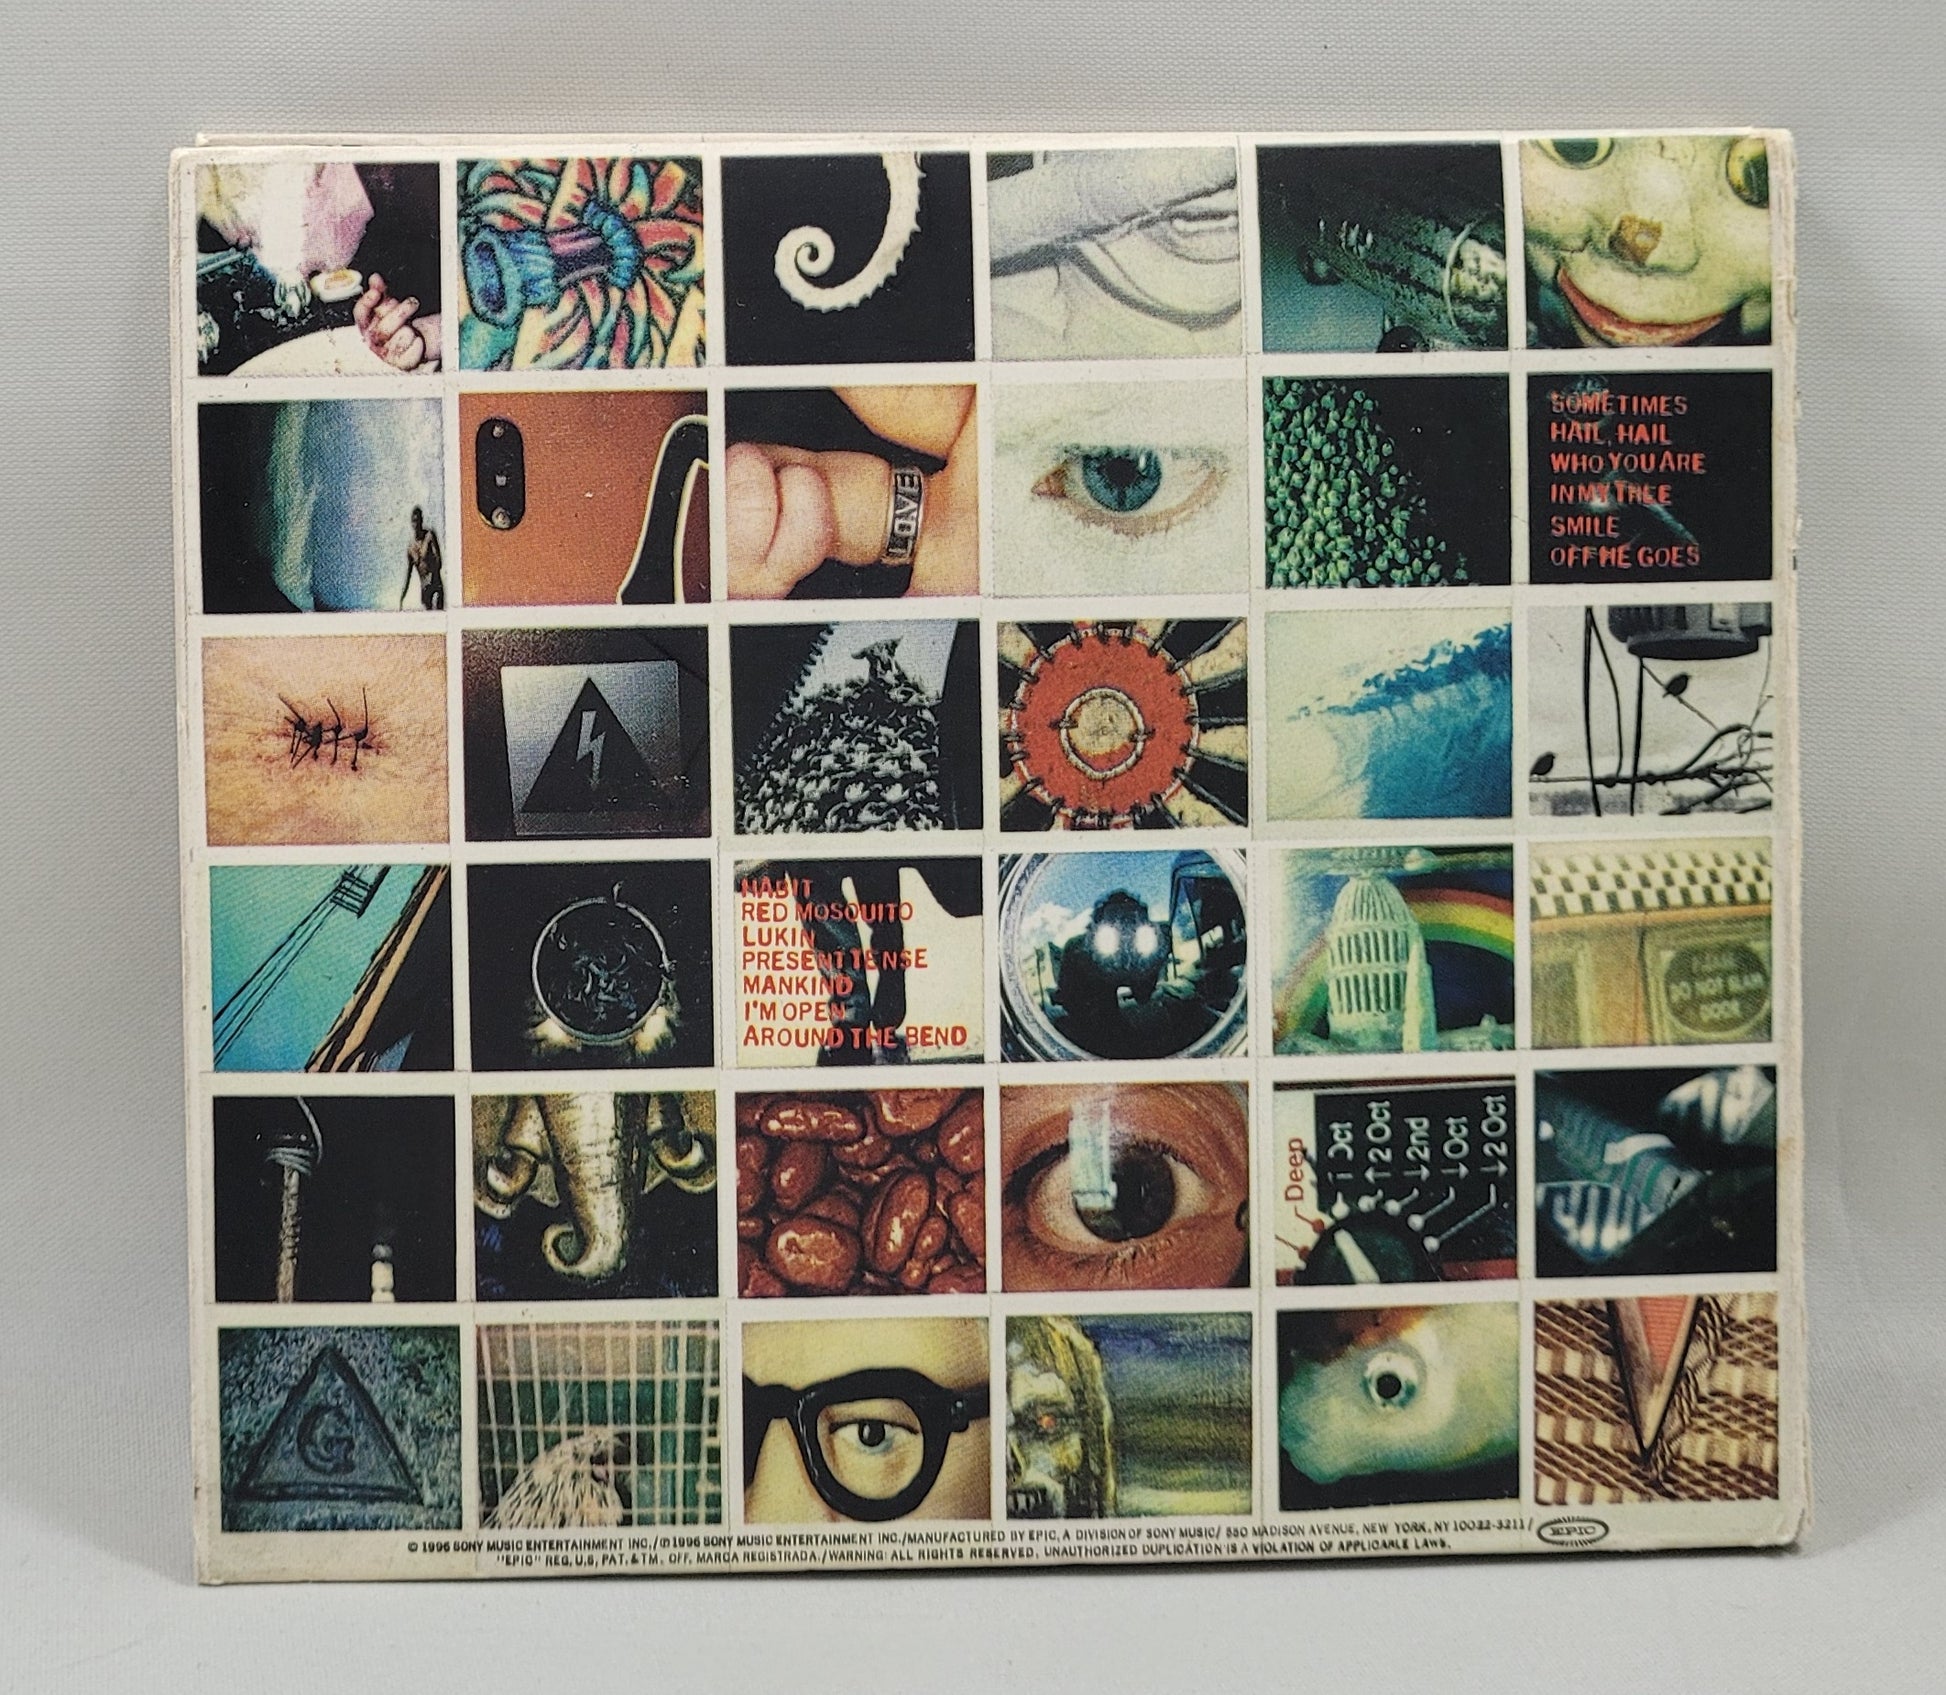 Pearl Jam - No Code [1996 "C"] [Used CD]